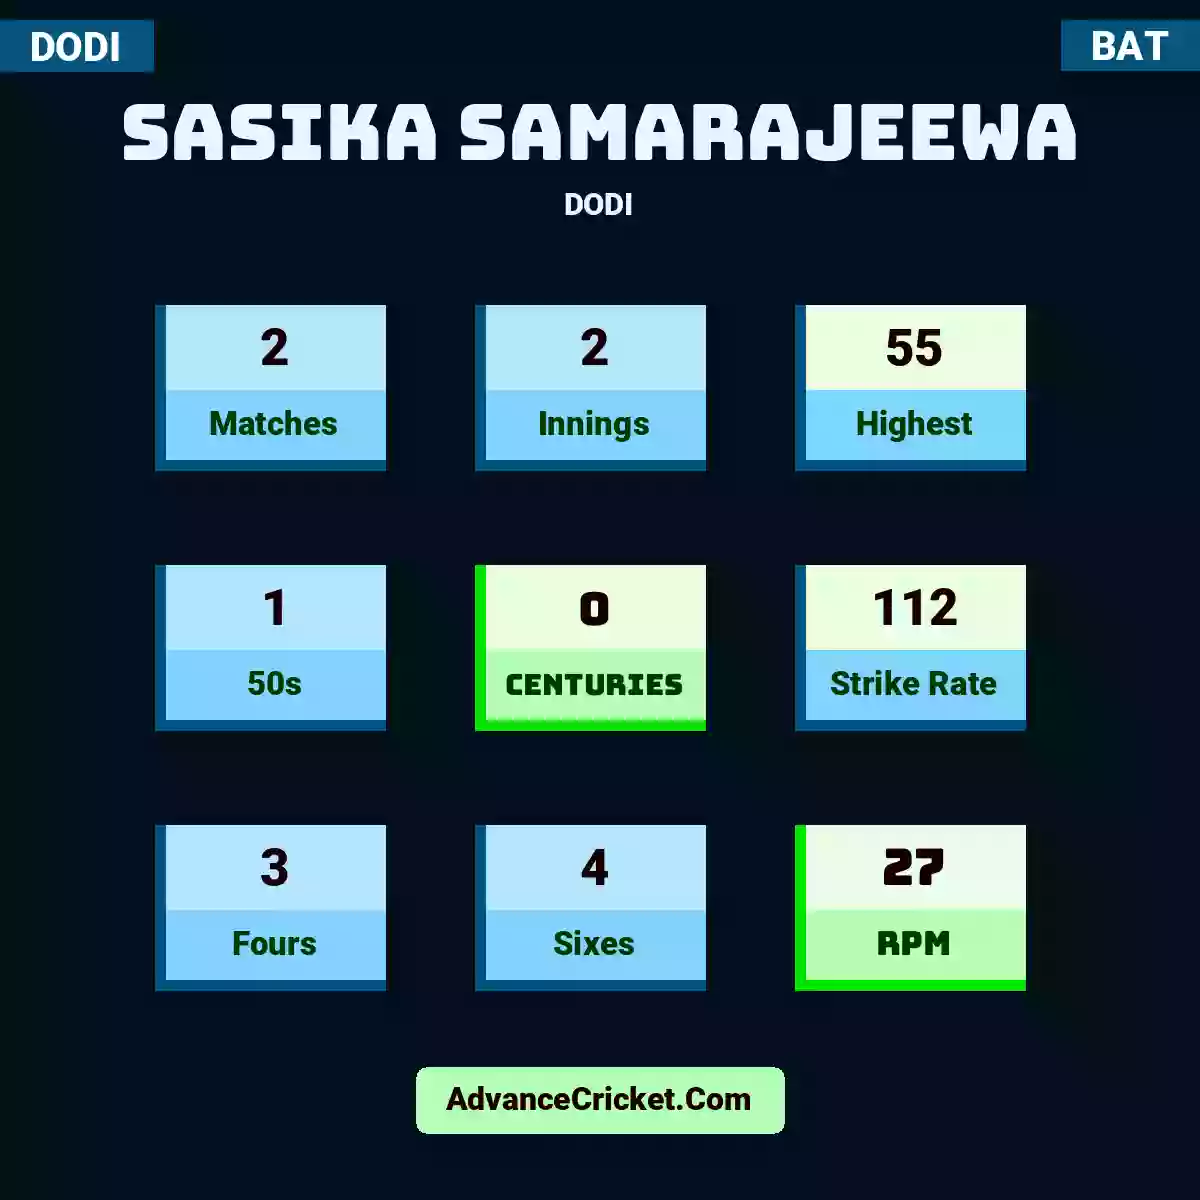 Sasika Samarajeewa DODI , Sasika Samarajeewa played 2 matches, scored 55 runs as highest, 1 half-centuries, and 0 centuries, with a strike rate of 112. S.Samarajeewa hit 3 fours and 4 sixes, with an RPM of 27.